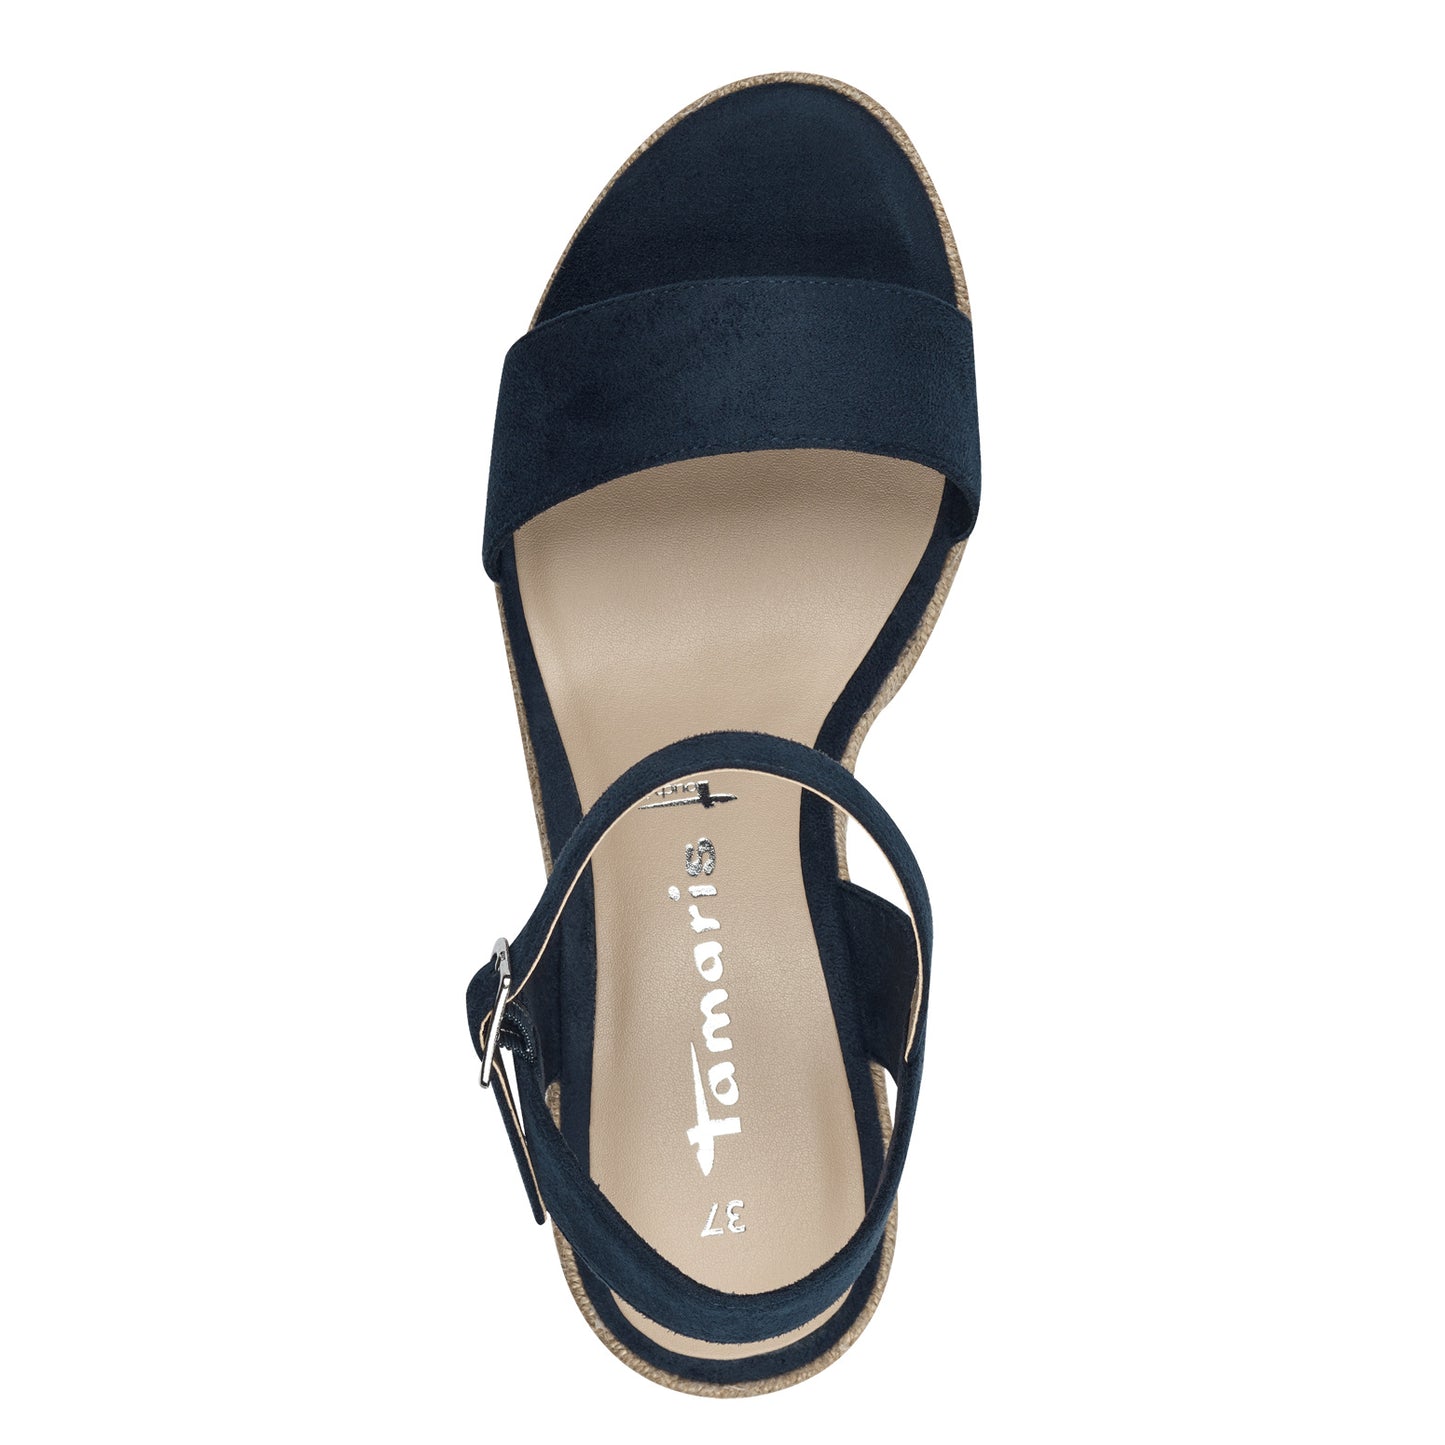 Tamaris - Ladies Shoes Sandals Navy (2105)